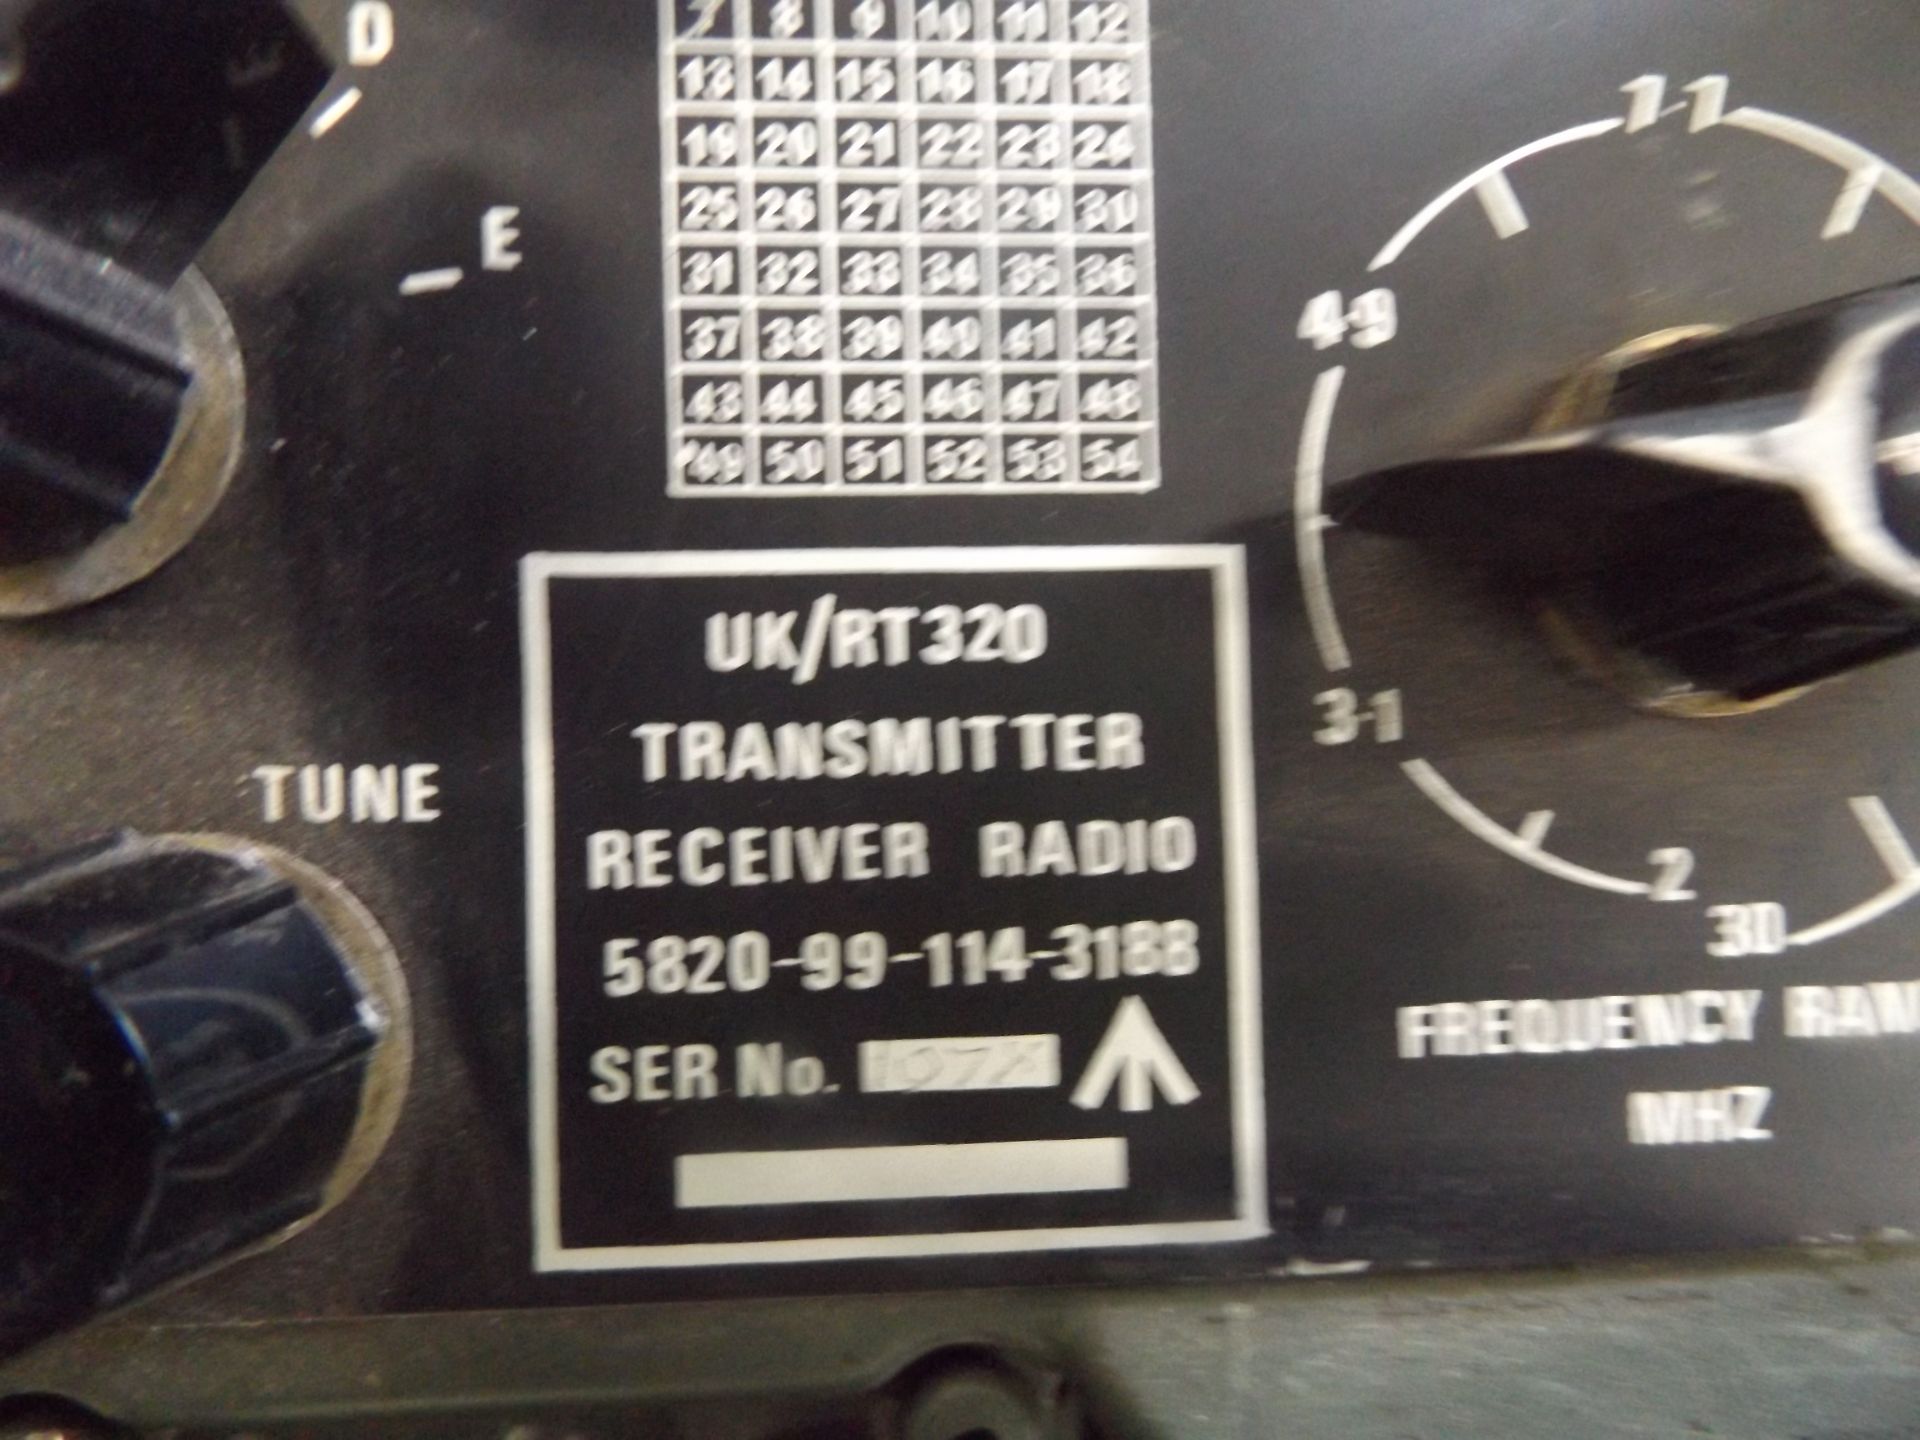 2 x RT320 Transmiter Receiver Radios - Bild 4 aus 4